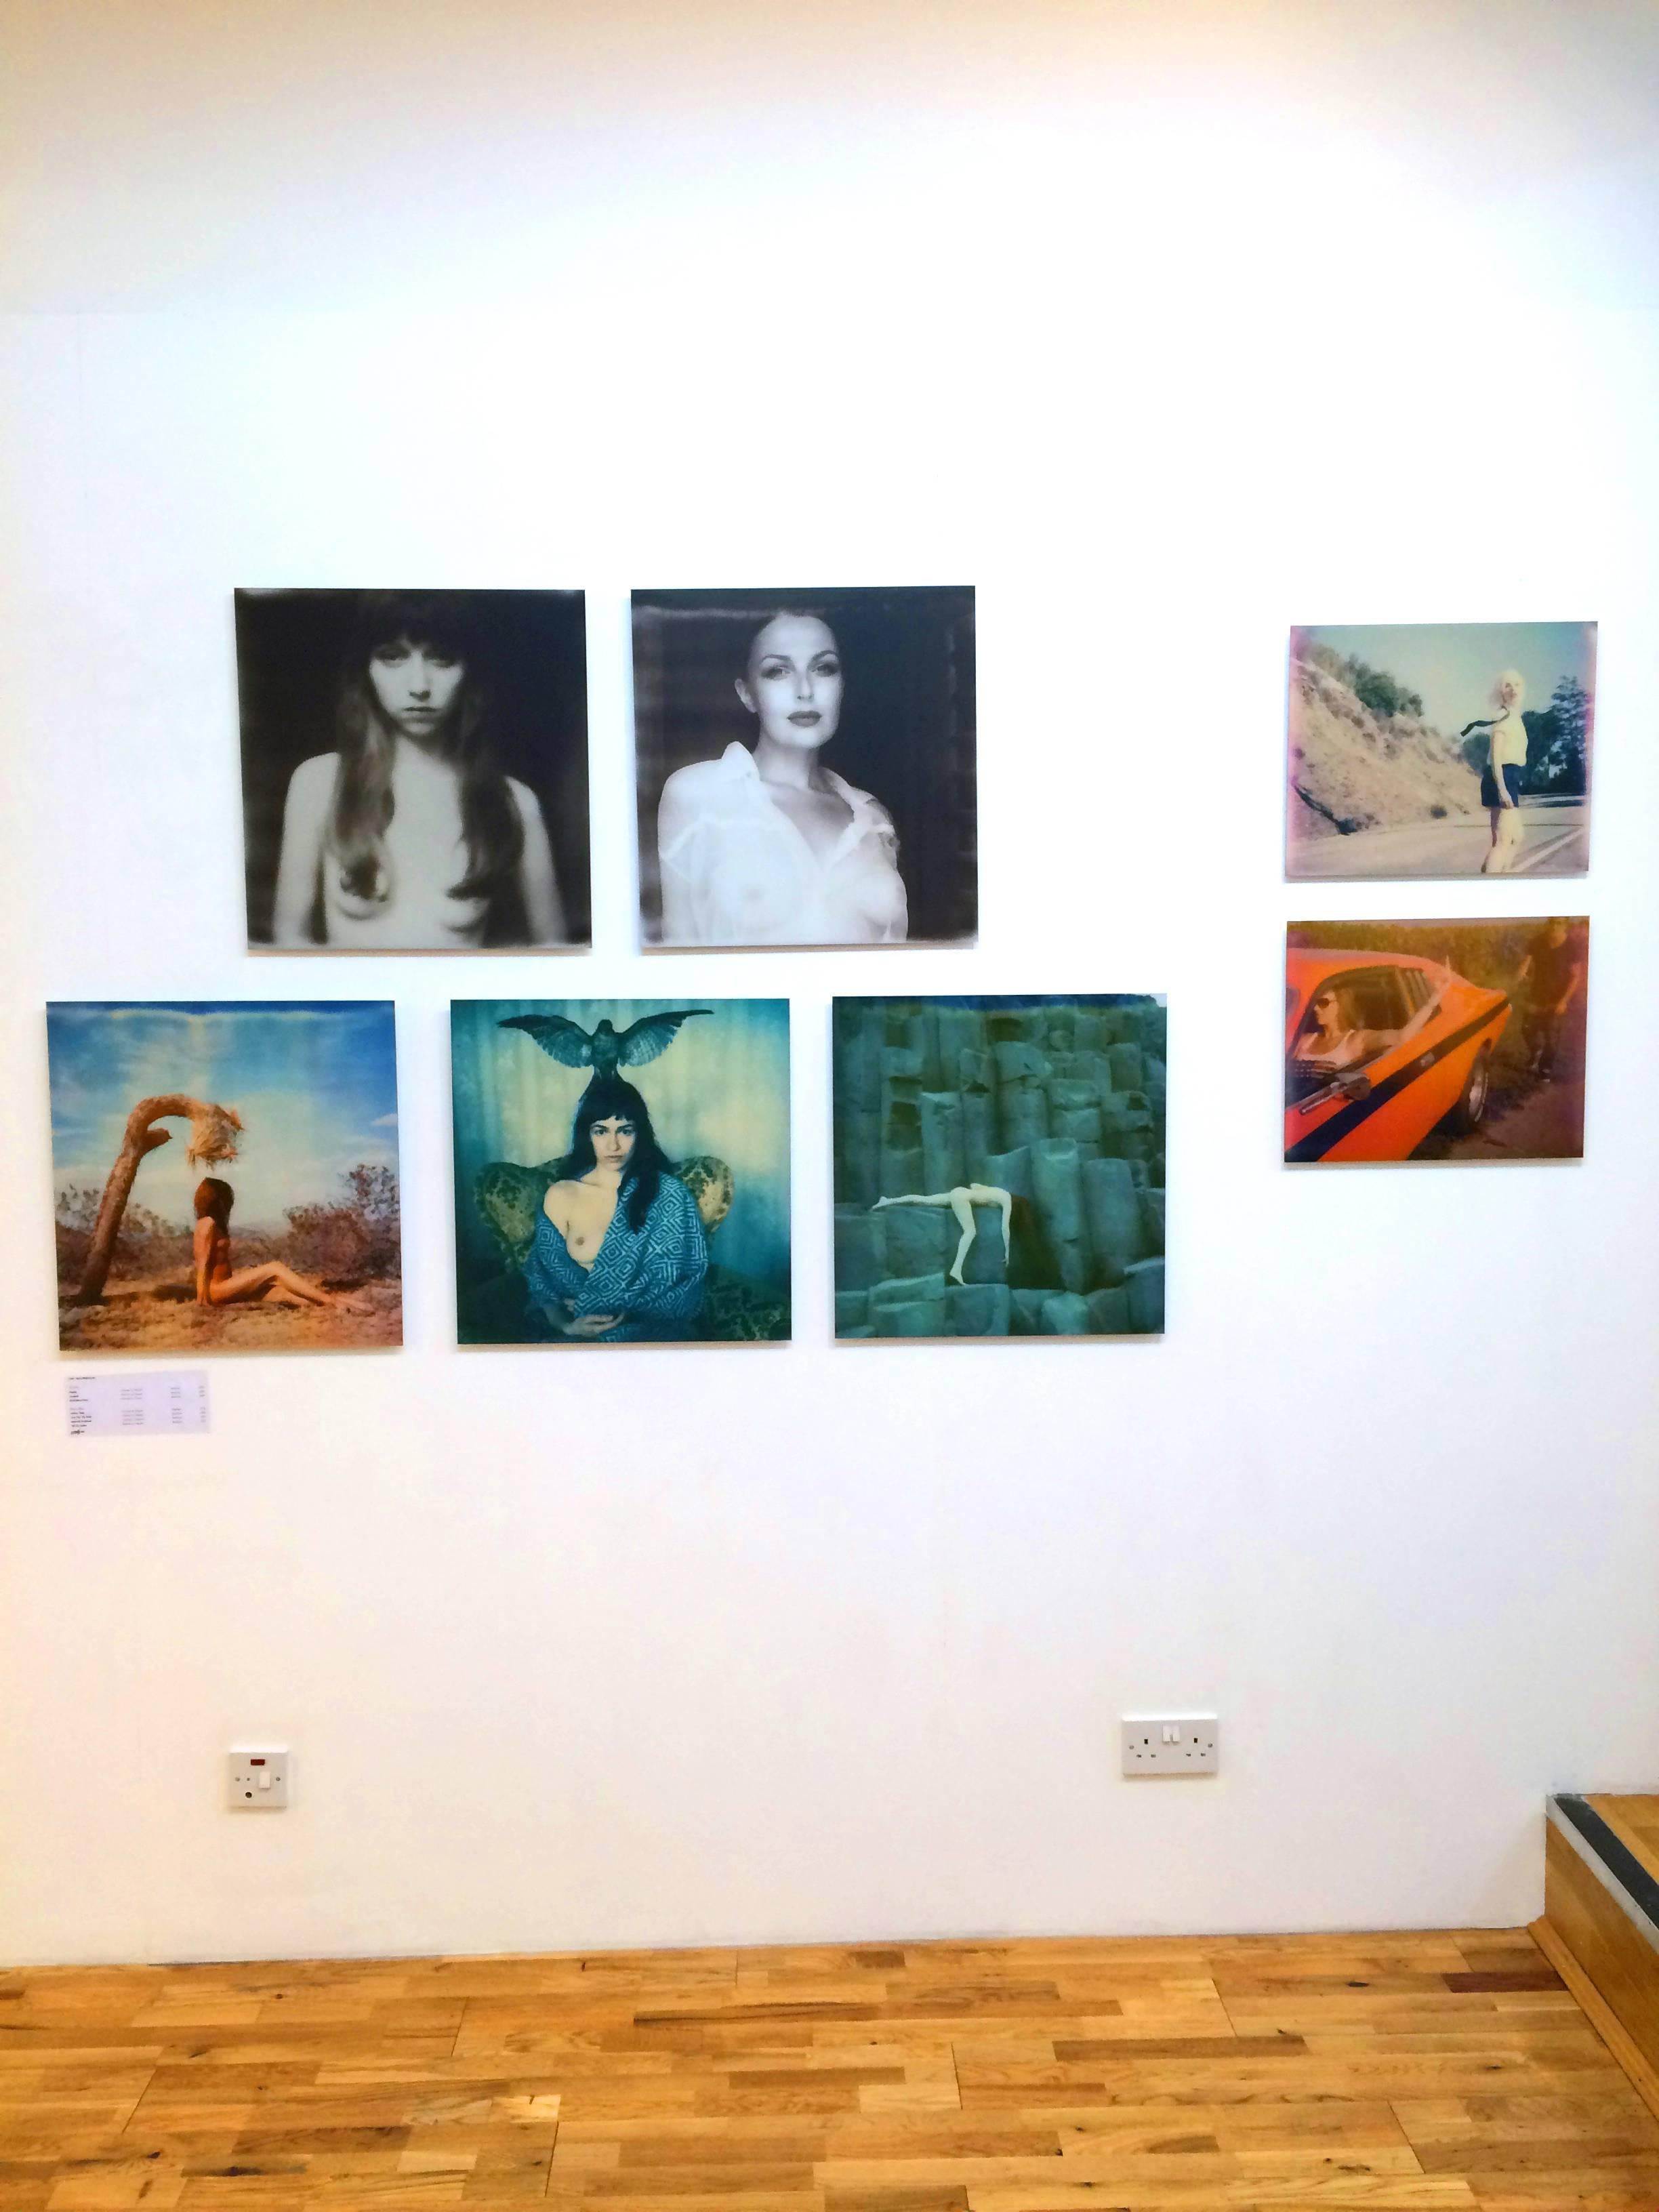 Fragile - 21st Century, Contemporary, Color, Polaroid, Nude - Photograph by Sven van Driessche